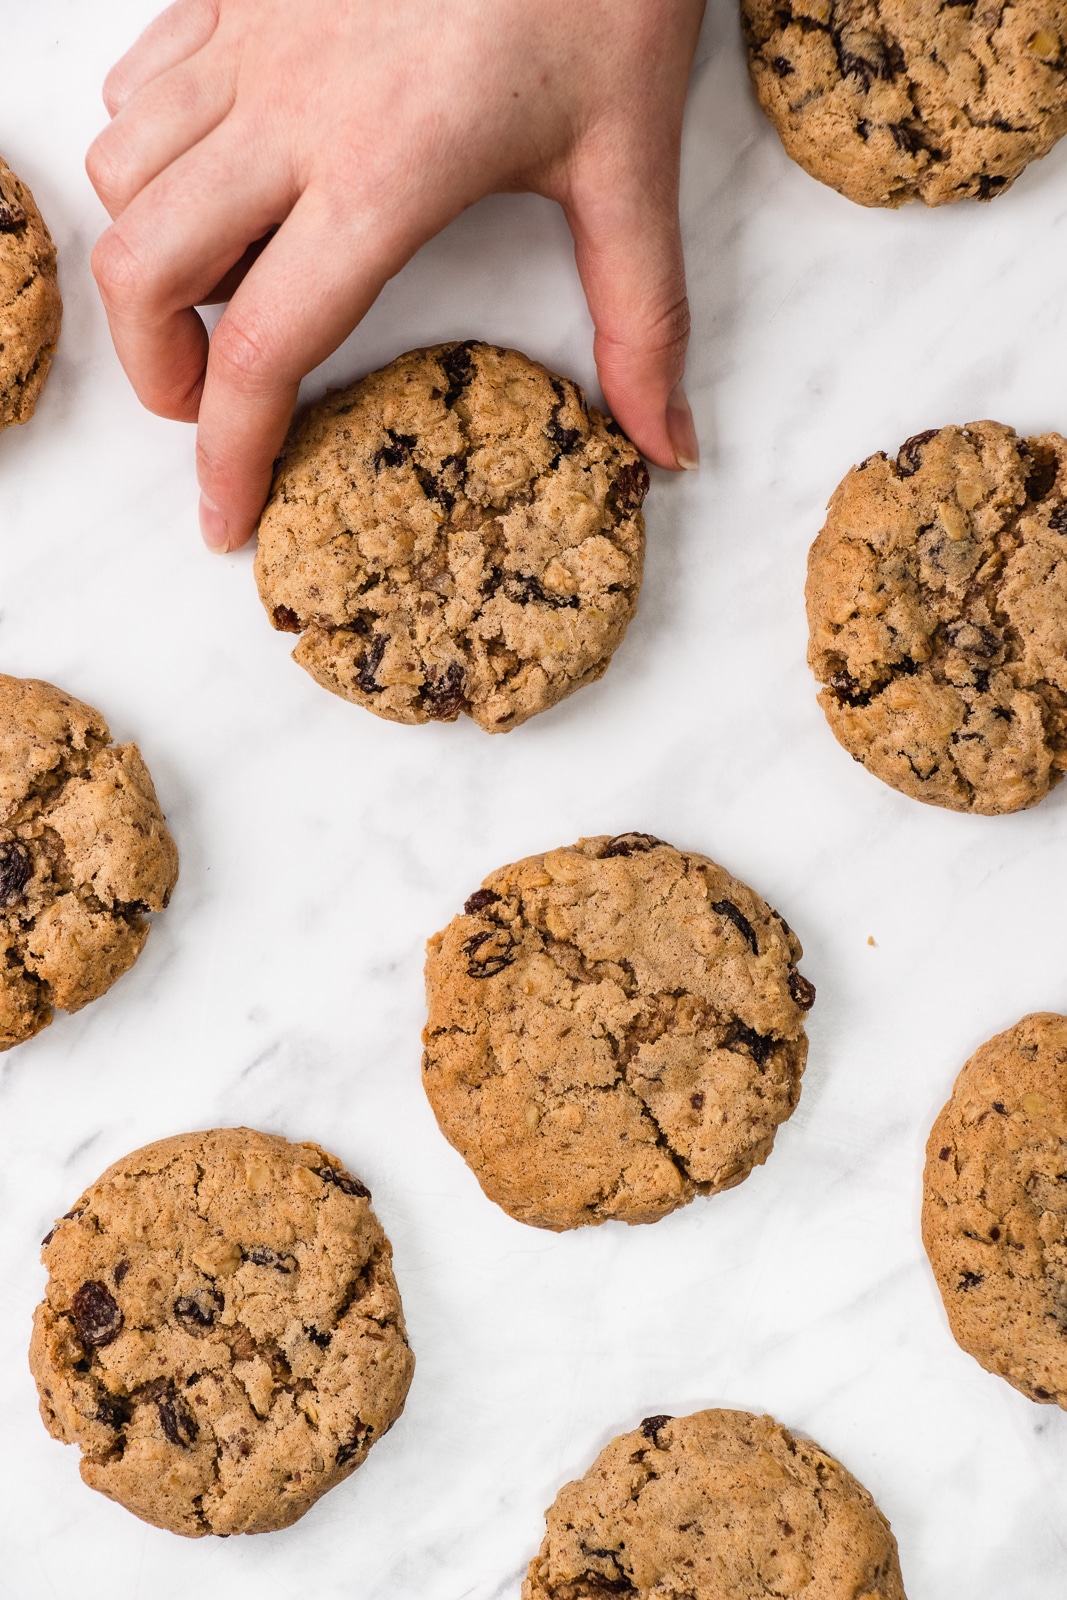 hand grabbing one vegan oatmeal raisin cookies - brown fluffy cookies with dark brown raisins